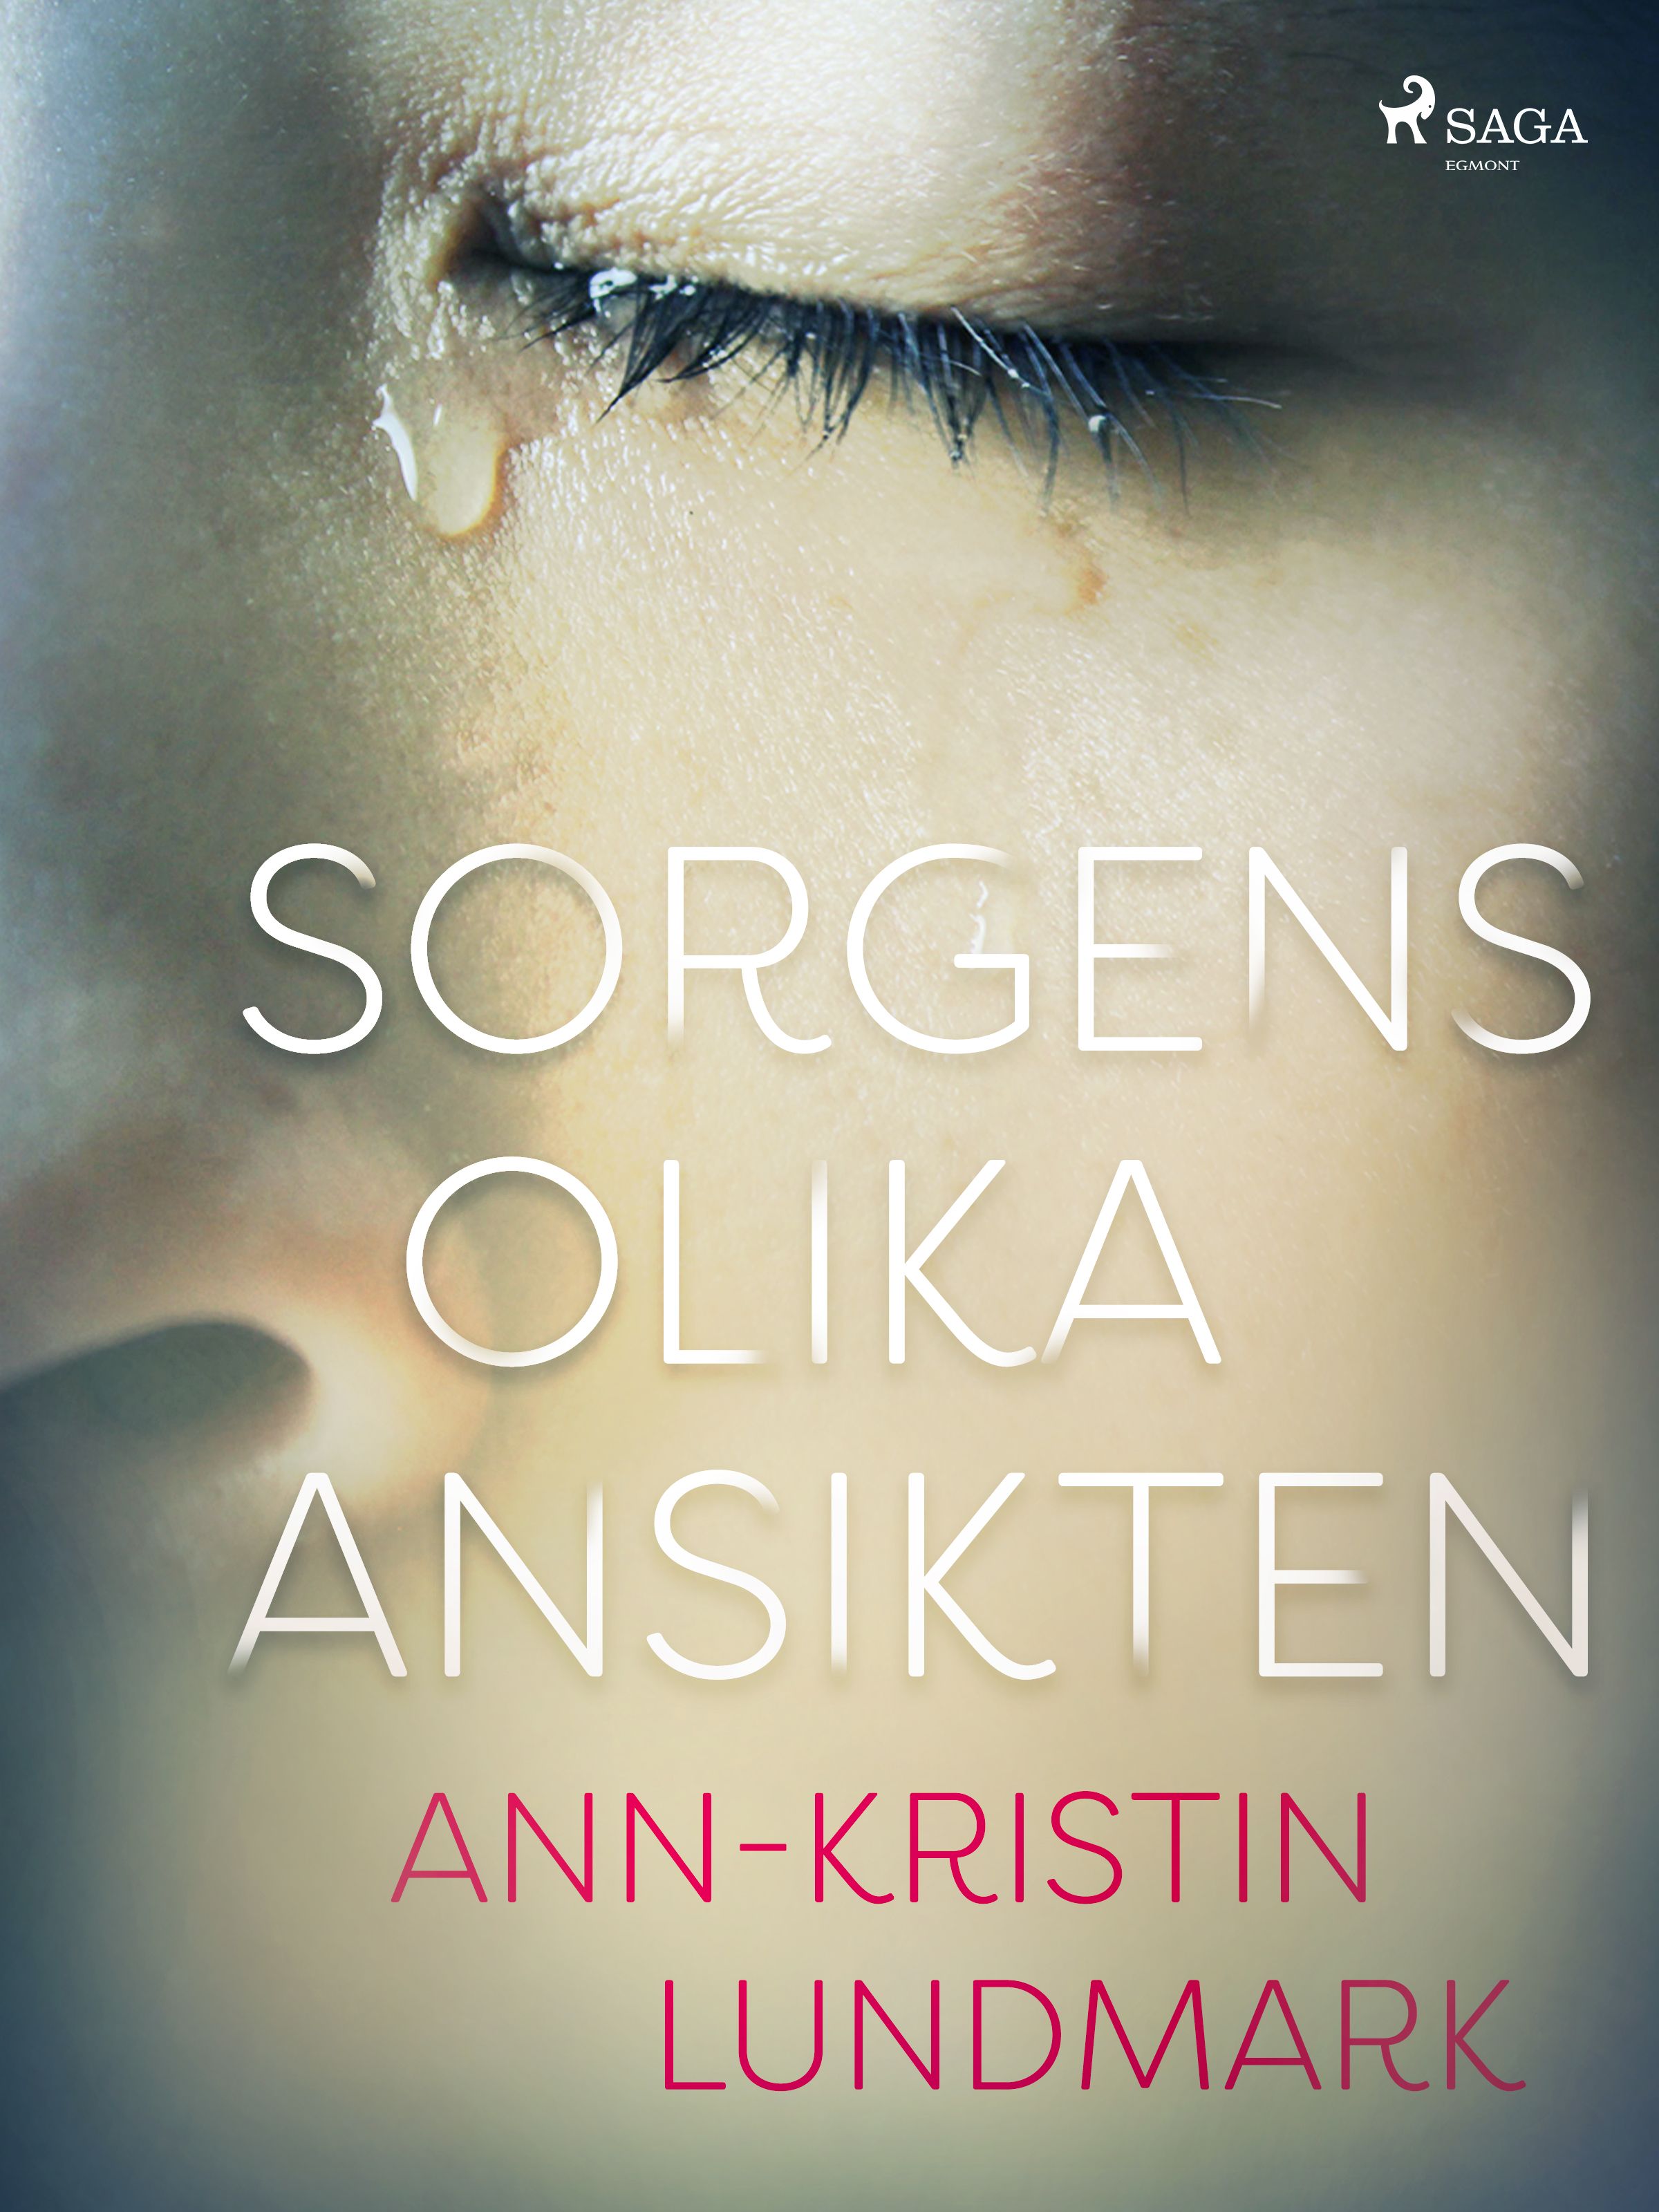 Sorgens olika ansikten, e-bog af Ann-Kristin Lundmark